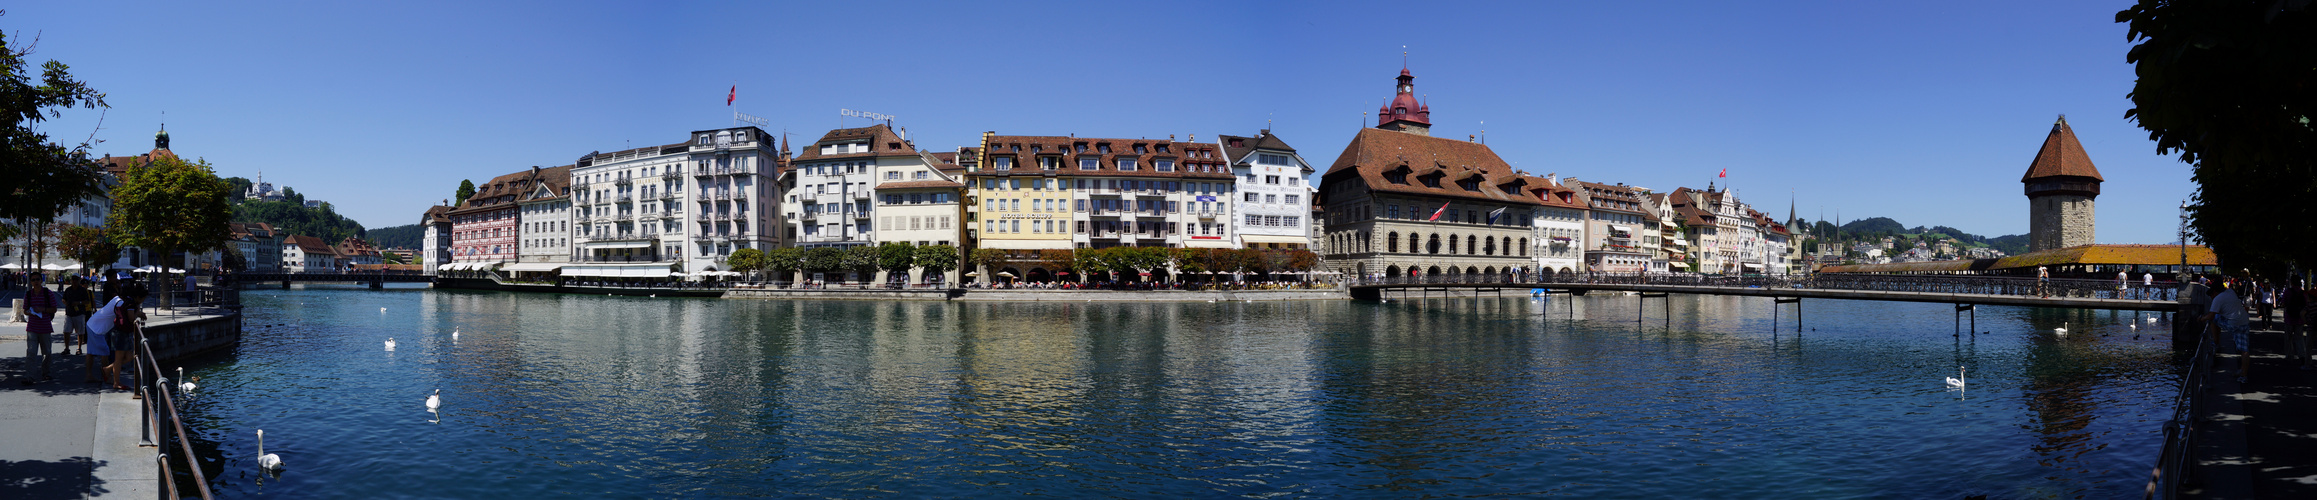 Panorama Rathausquai Luzern